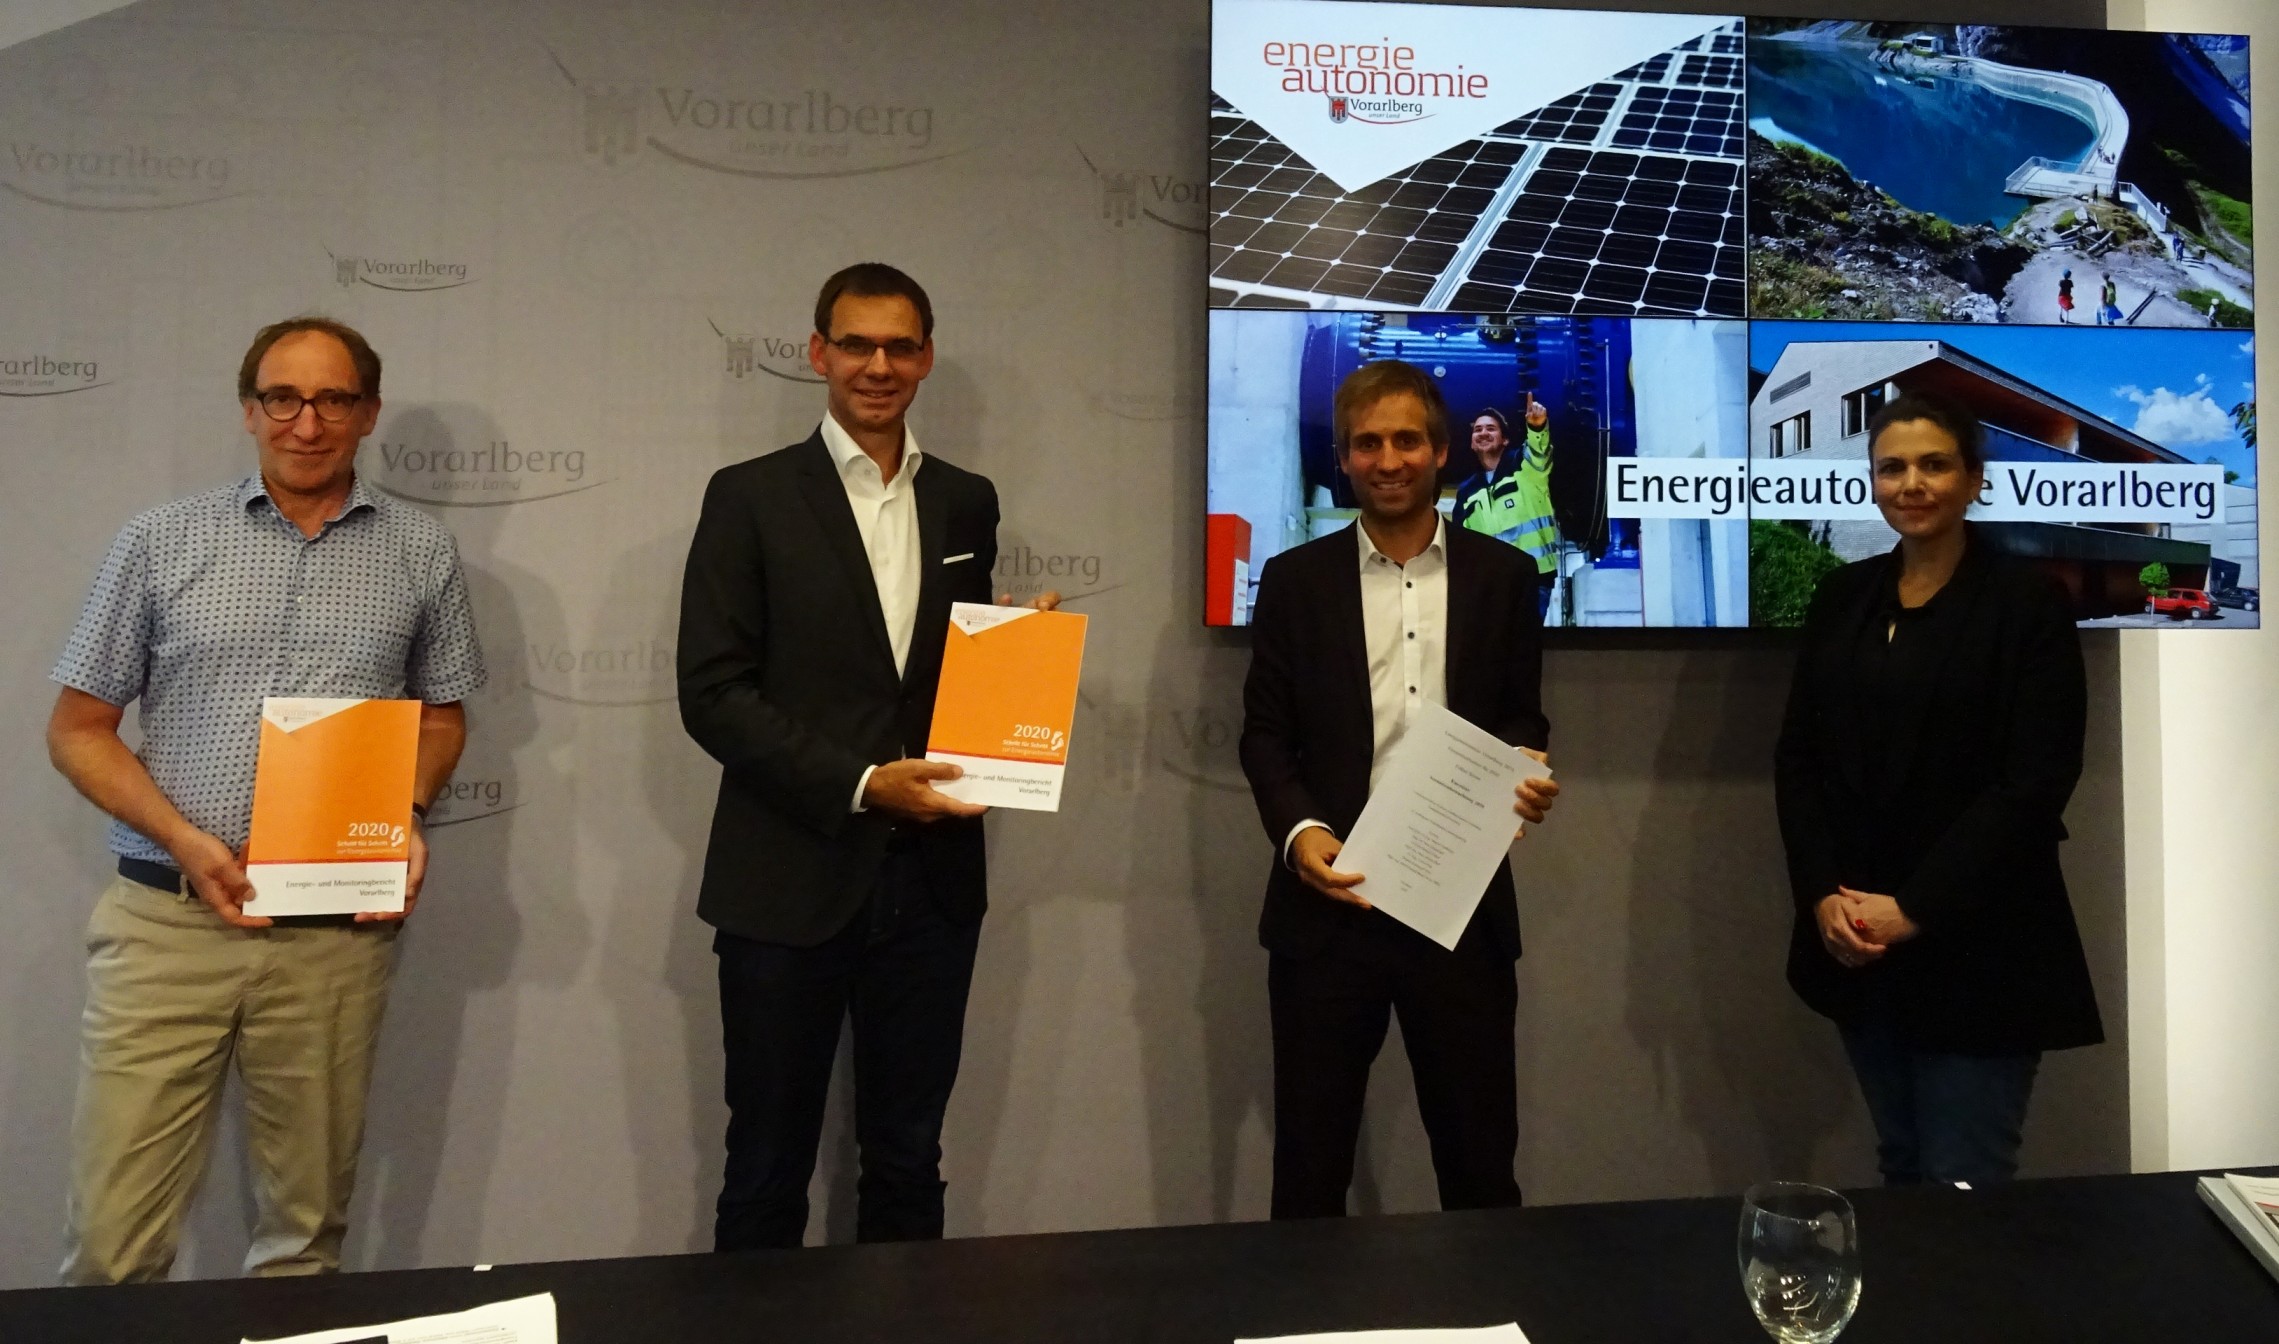 Press conference on Energy Autonomy Vorarlberg 2050